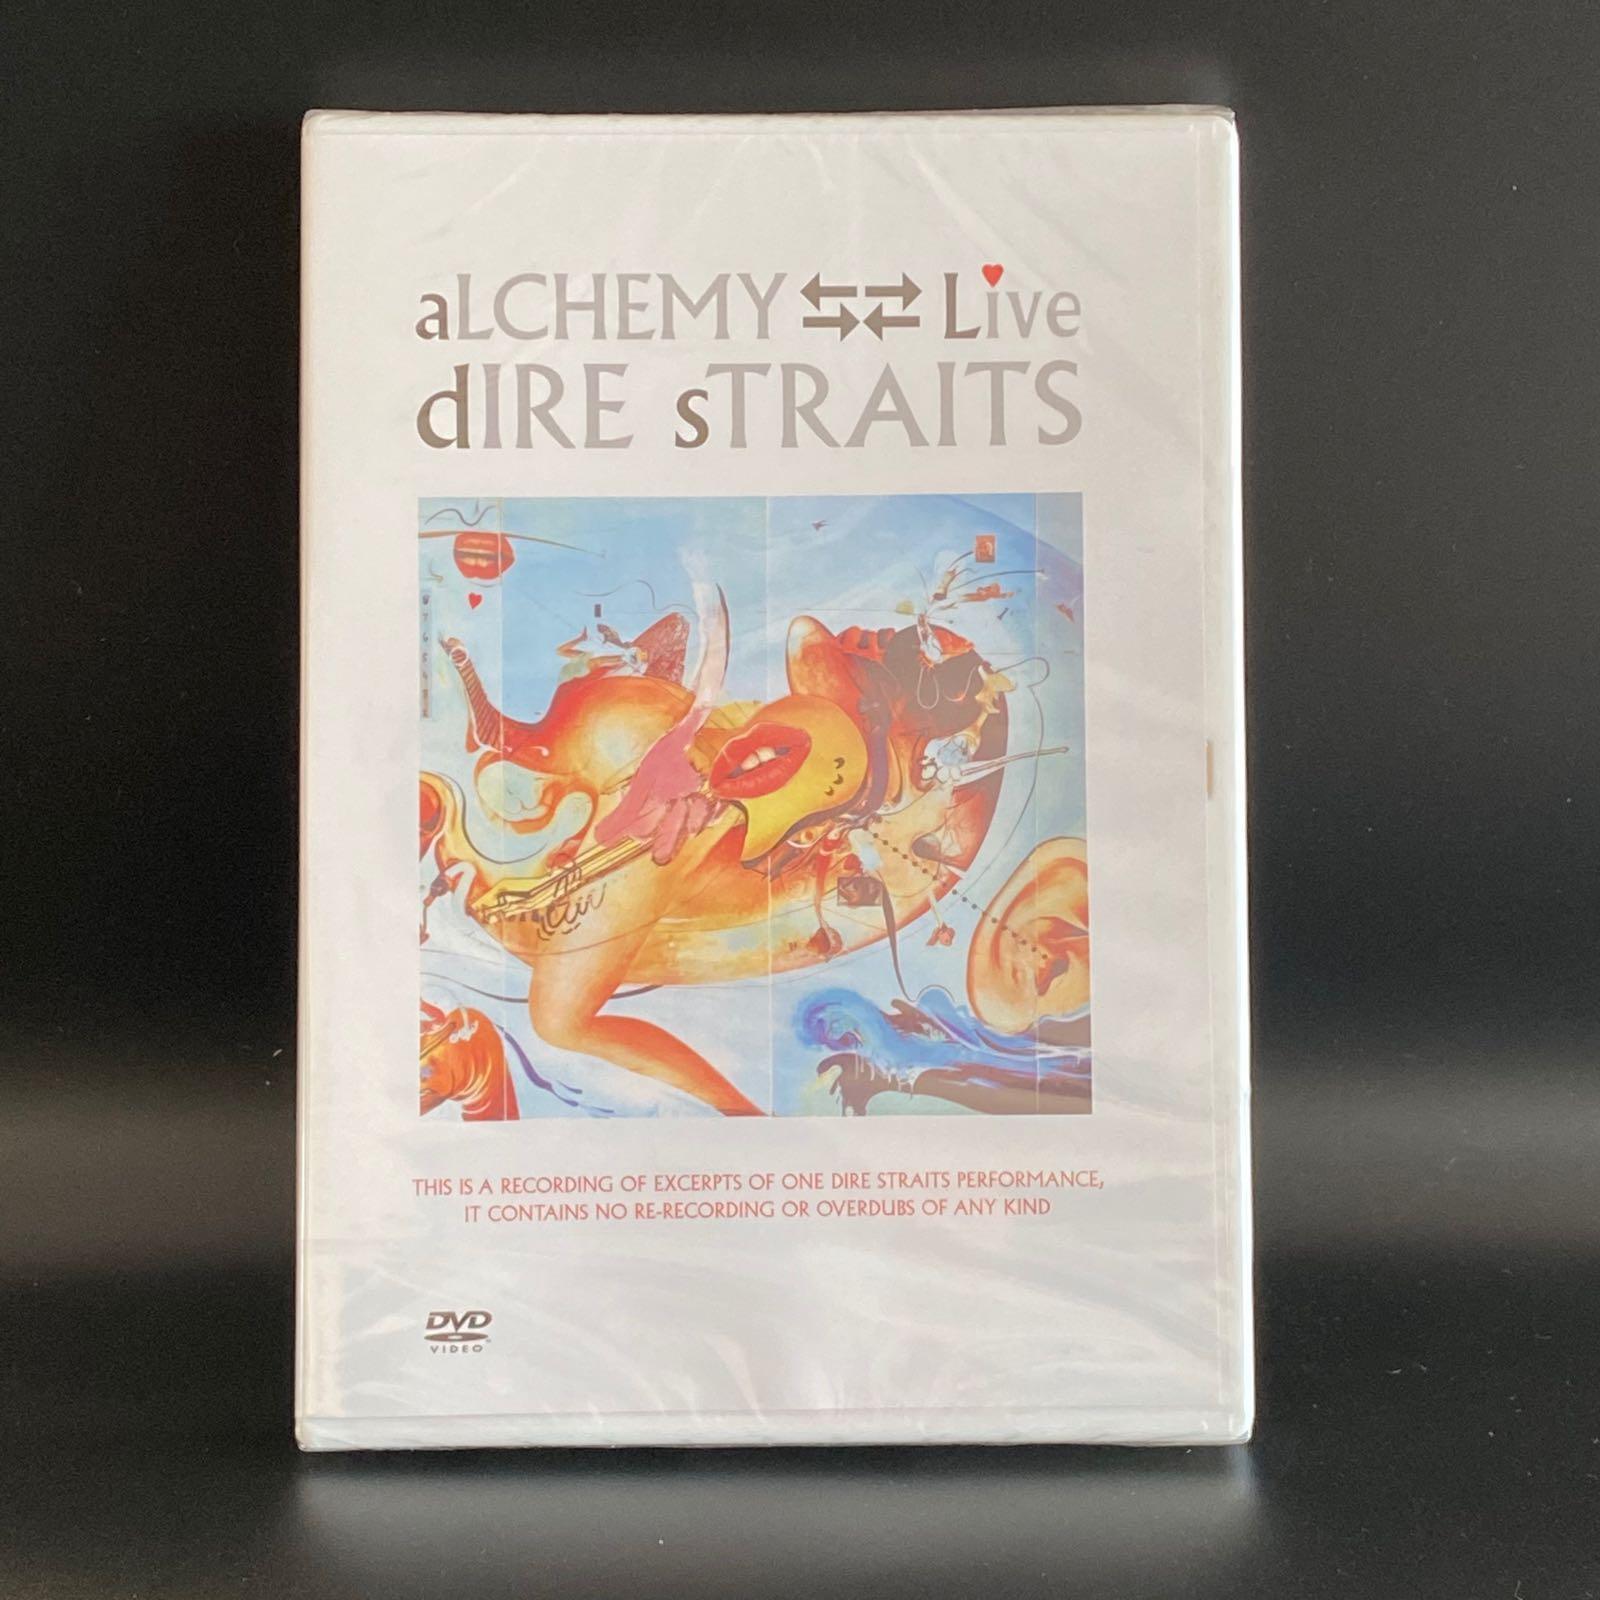 Dire Straits - Alchemy DVD - DD Music Geek